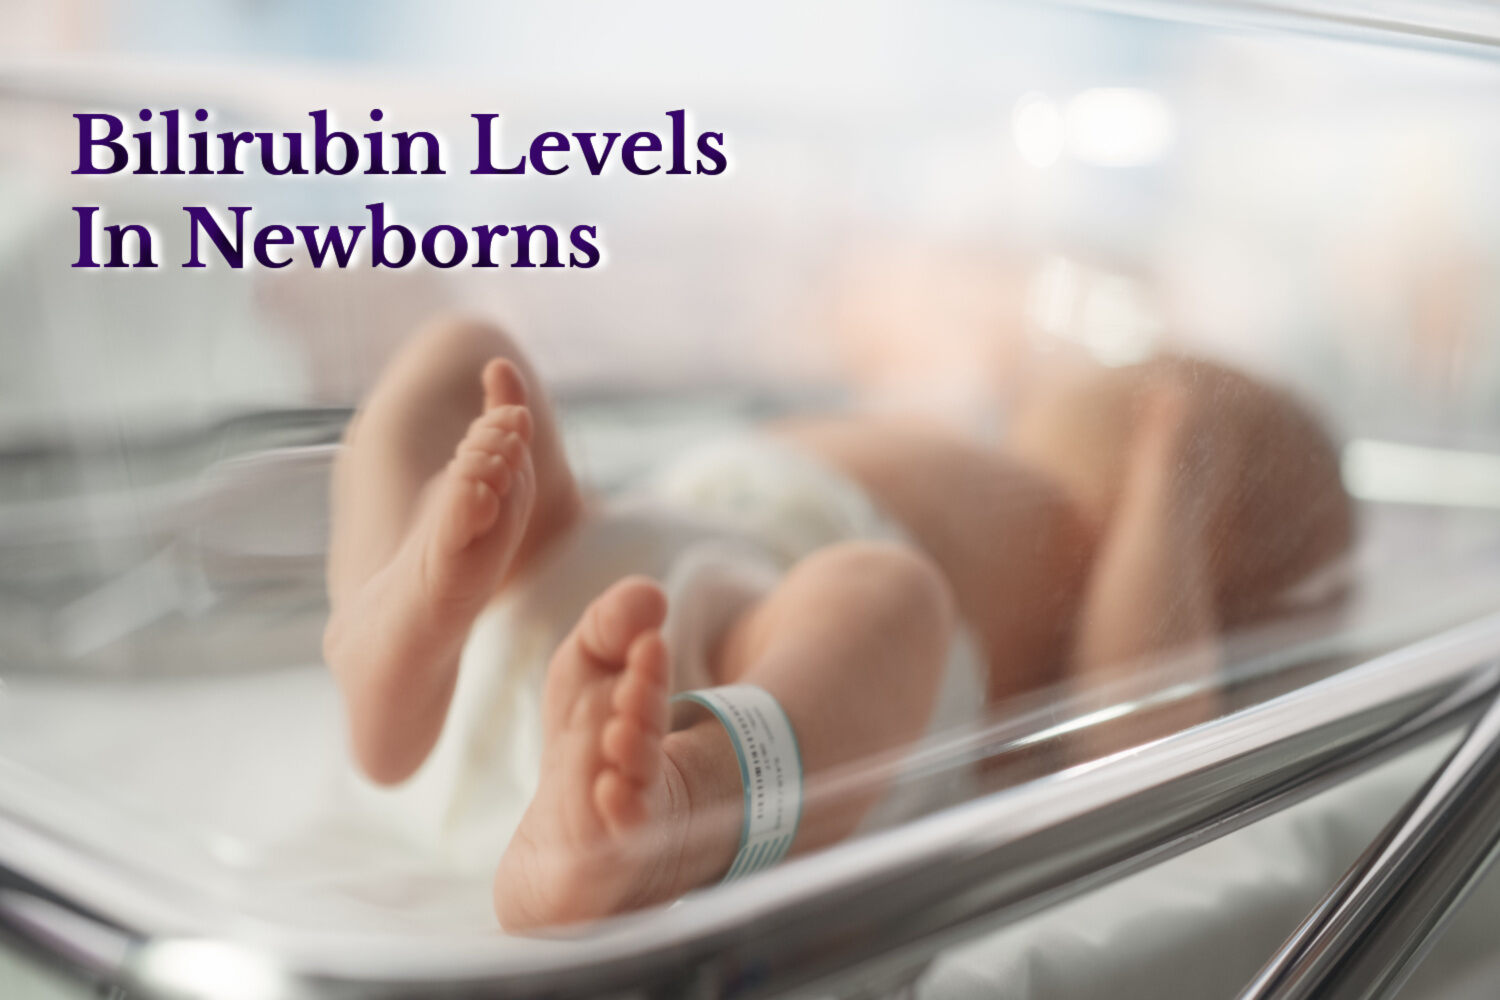 Newborn bilirubin levels